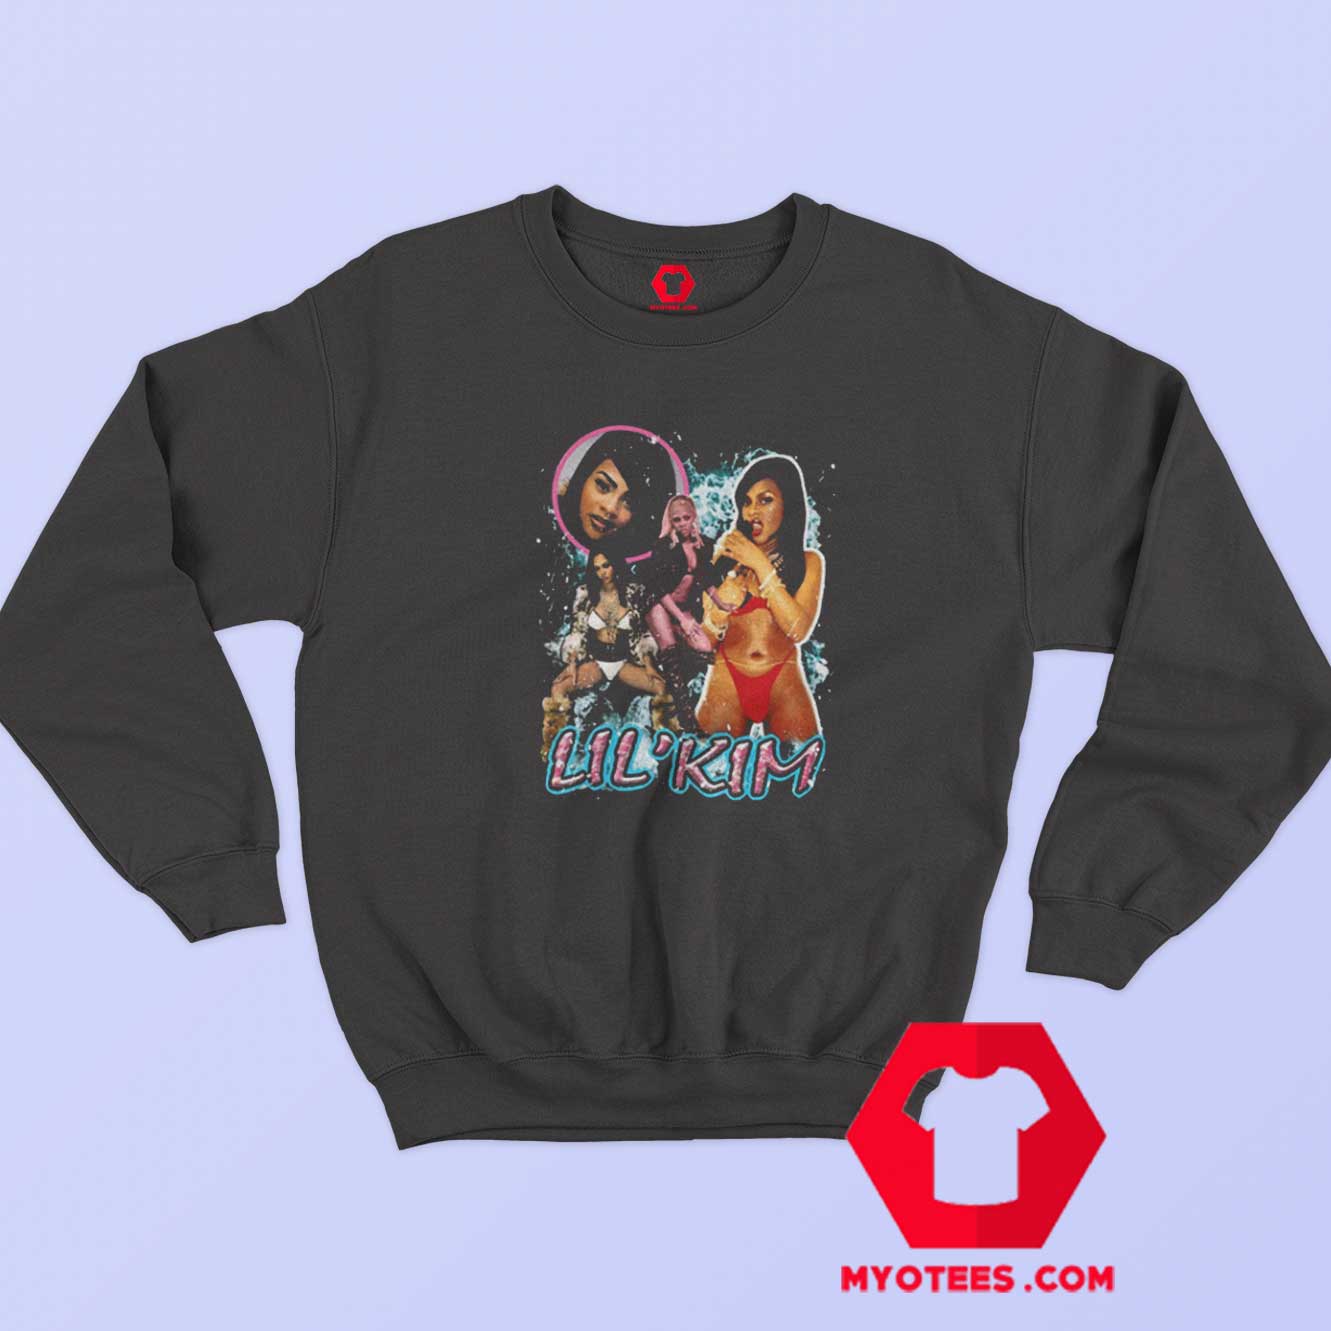 Kim Bikini Vintage 90s Graphic Sweatshirt On Sale | myotees.com